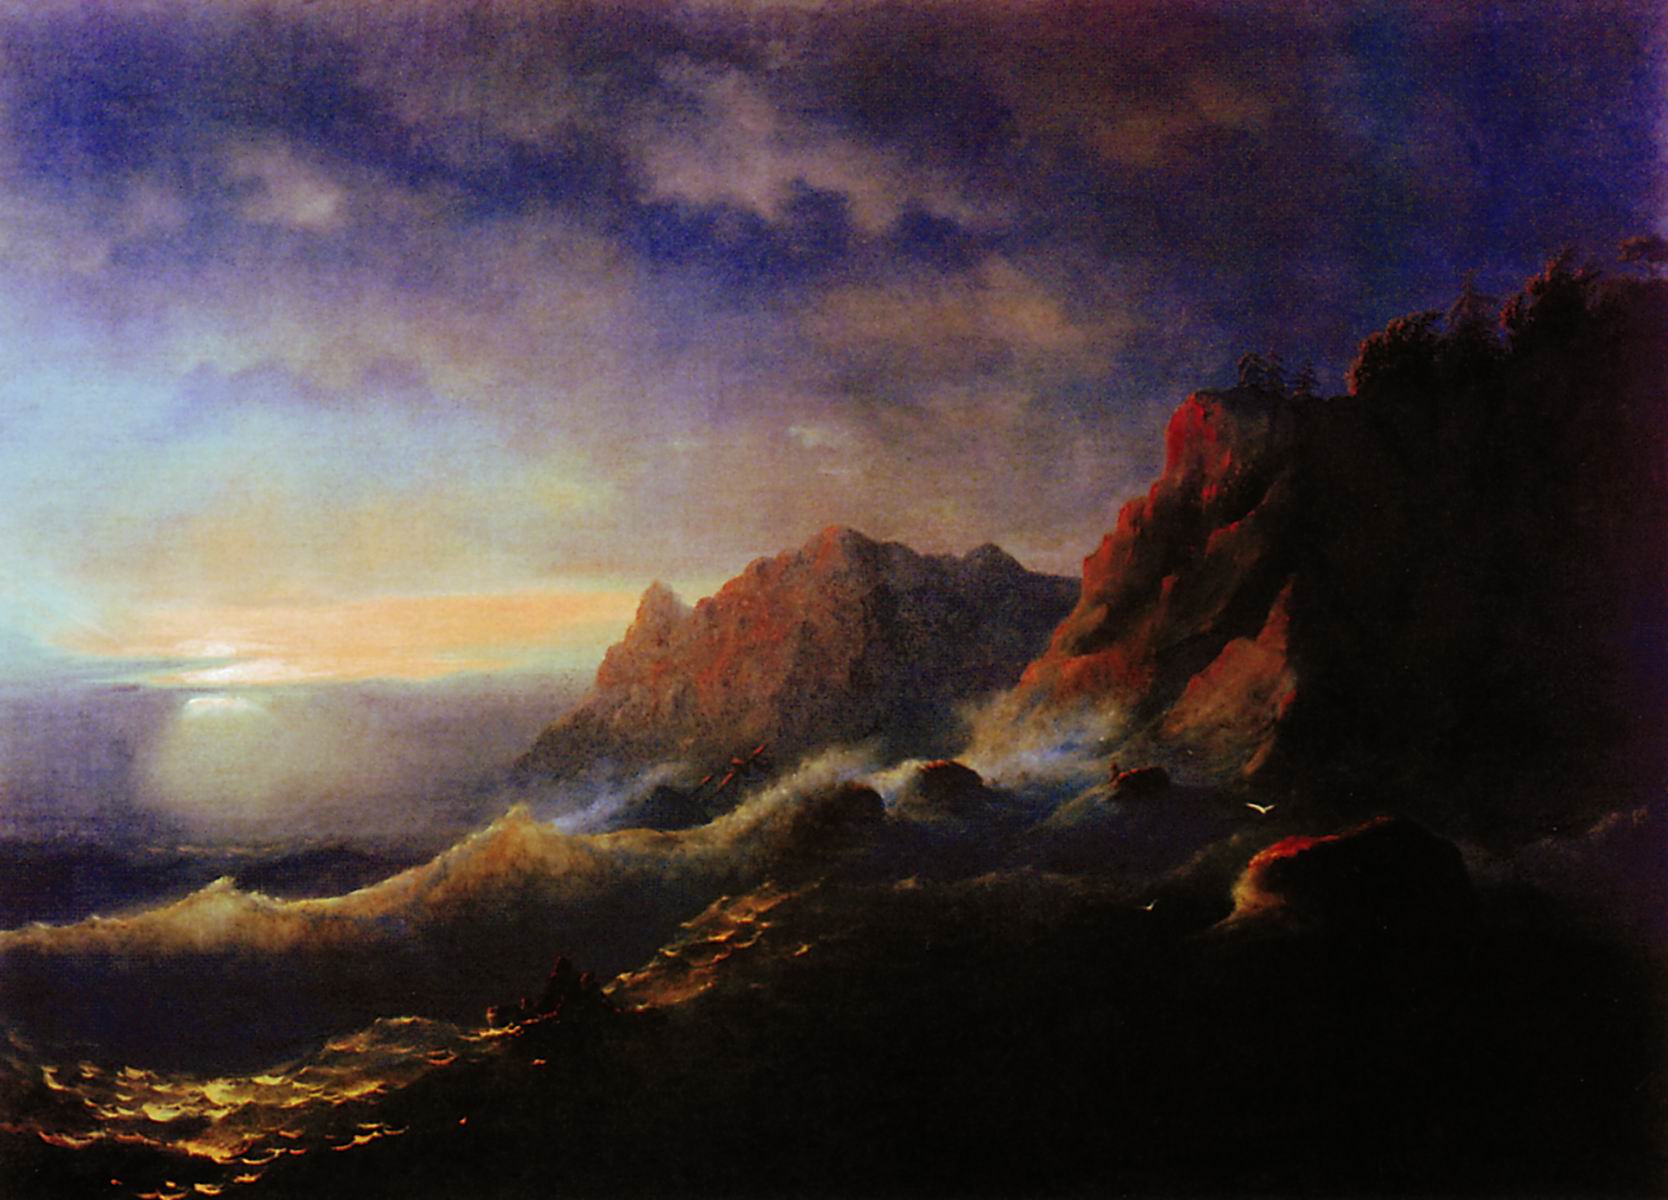 Айвазовский. Буря. Закат. 1856